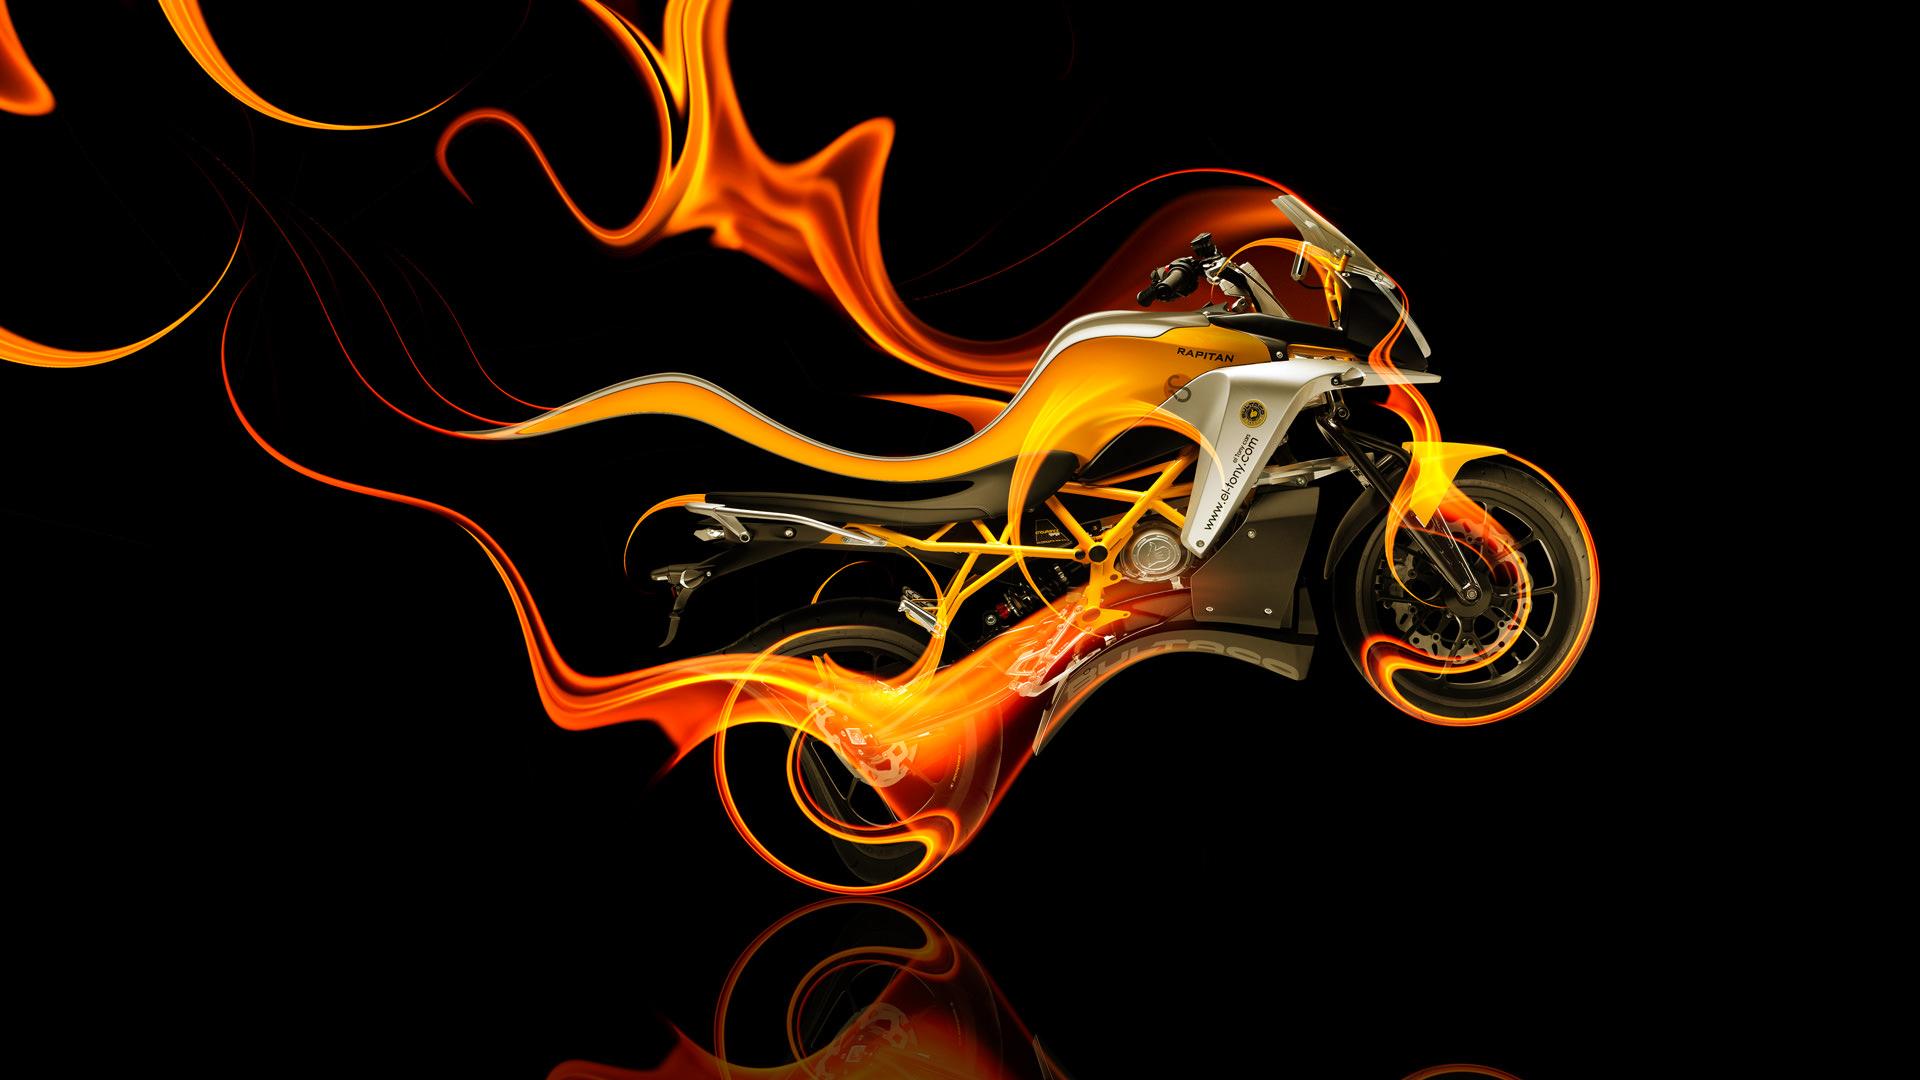 Moto Rapitan Side Fire Abstract Bike 2014 HD Wallpaper design